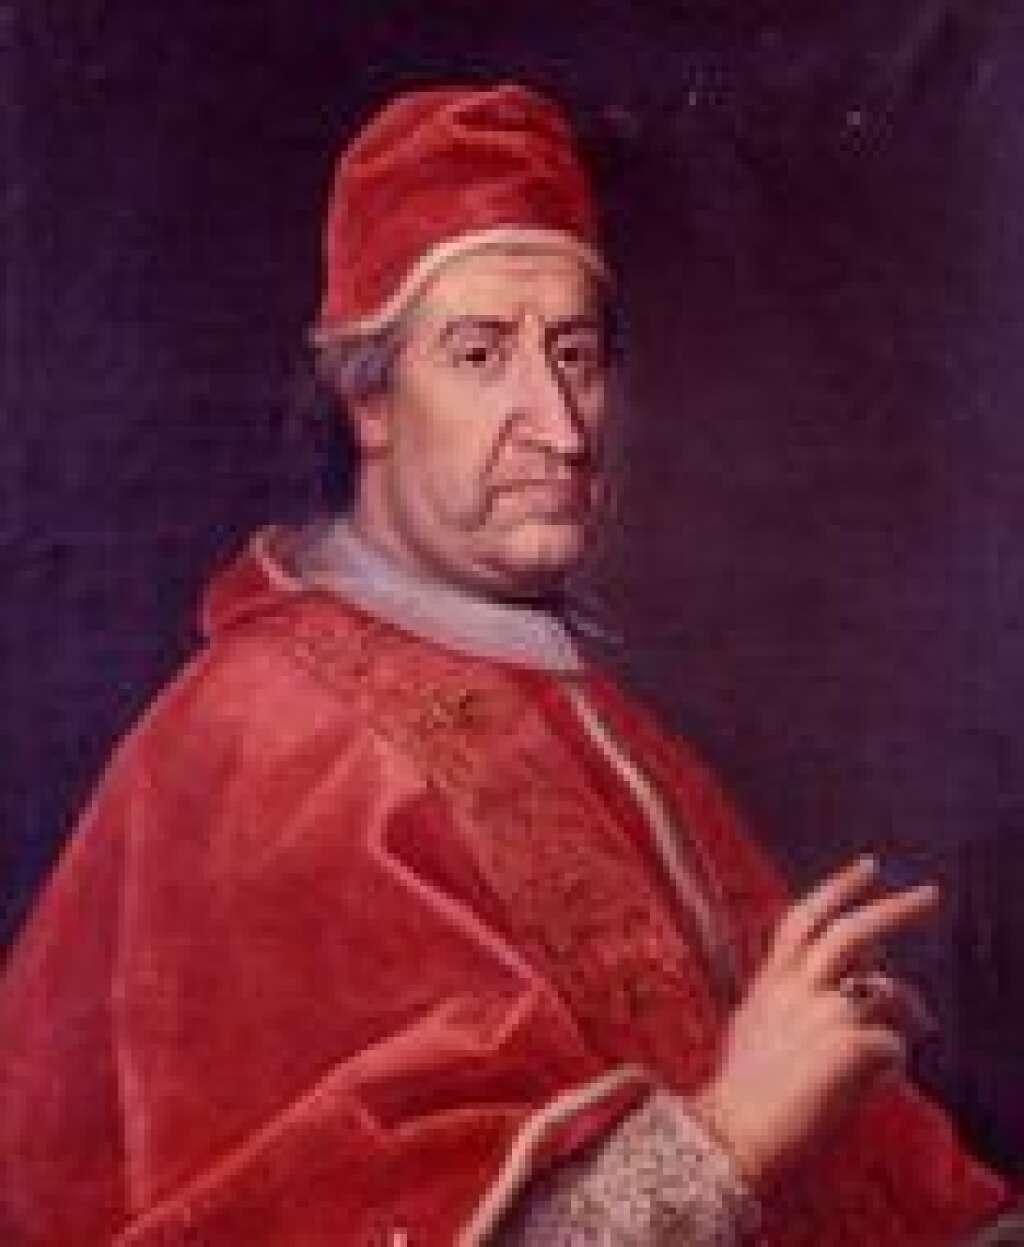 Clement XI - Nov. 23, 1700 – March 19, 1721